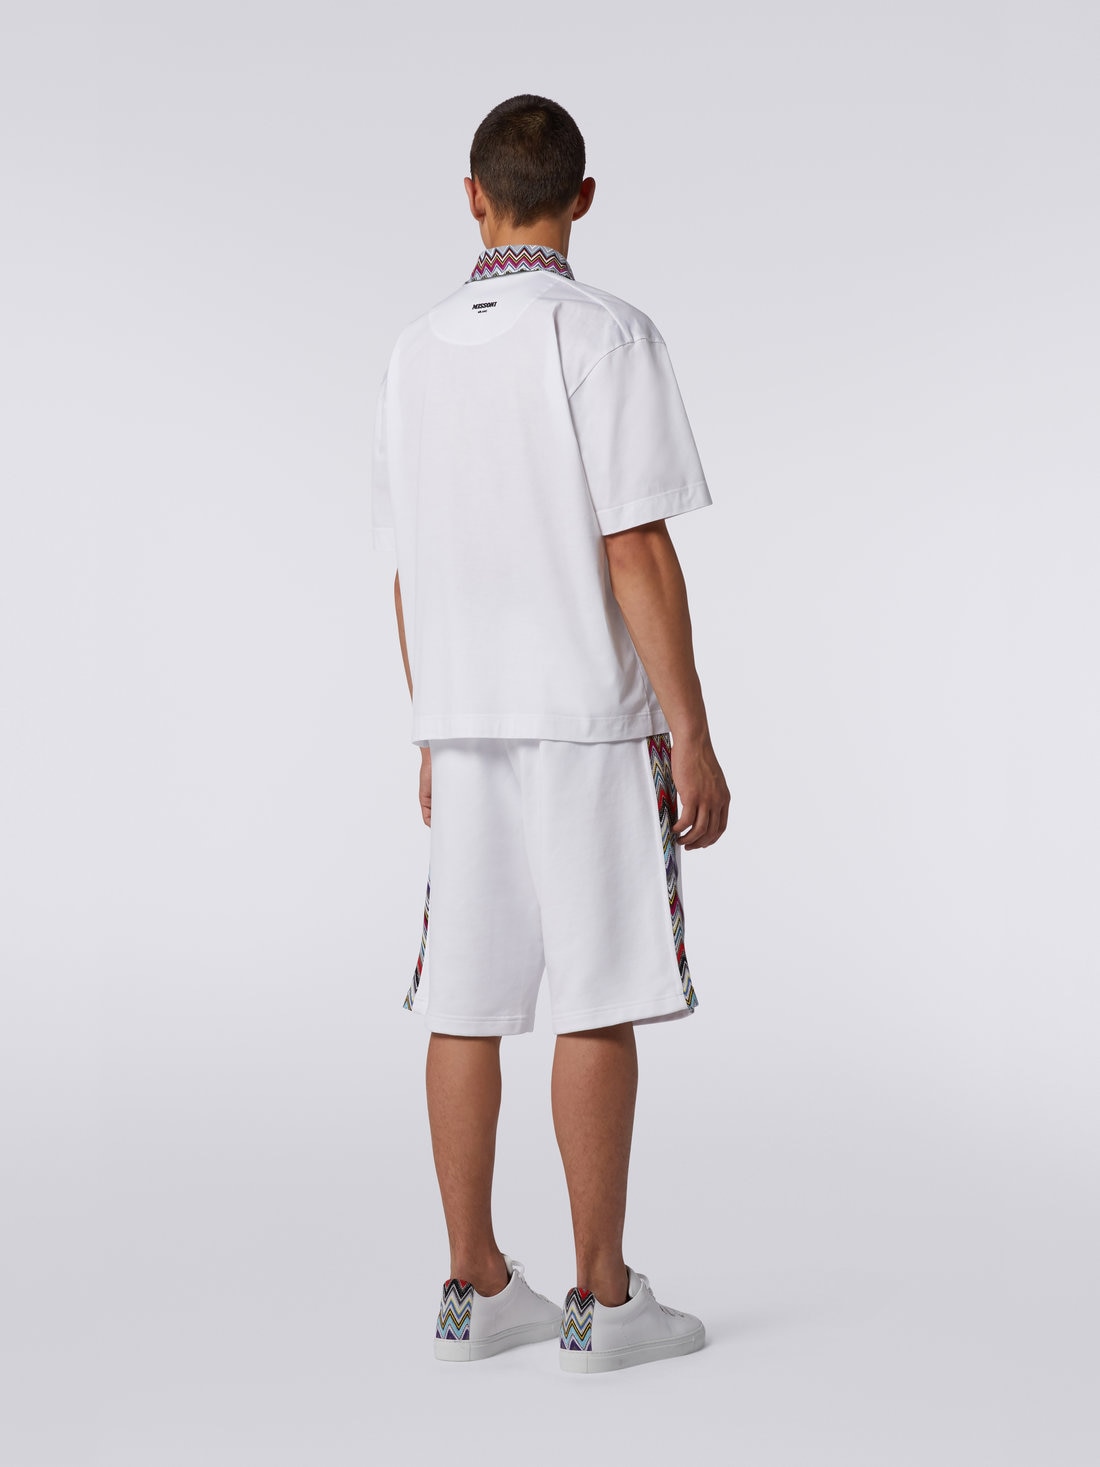 Cotton polo shirt with dégradé chevron pattern, White  - US23S20GBJ00E4S016P - 3